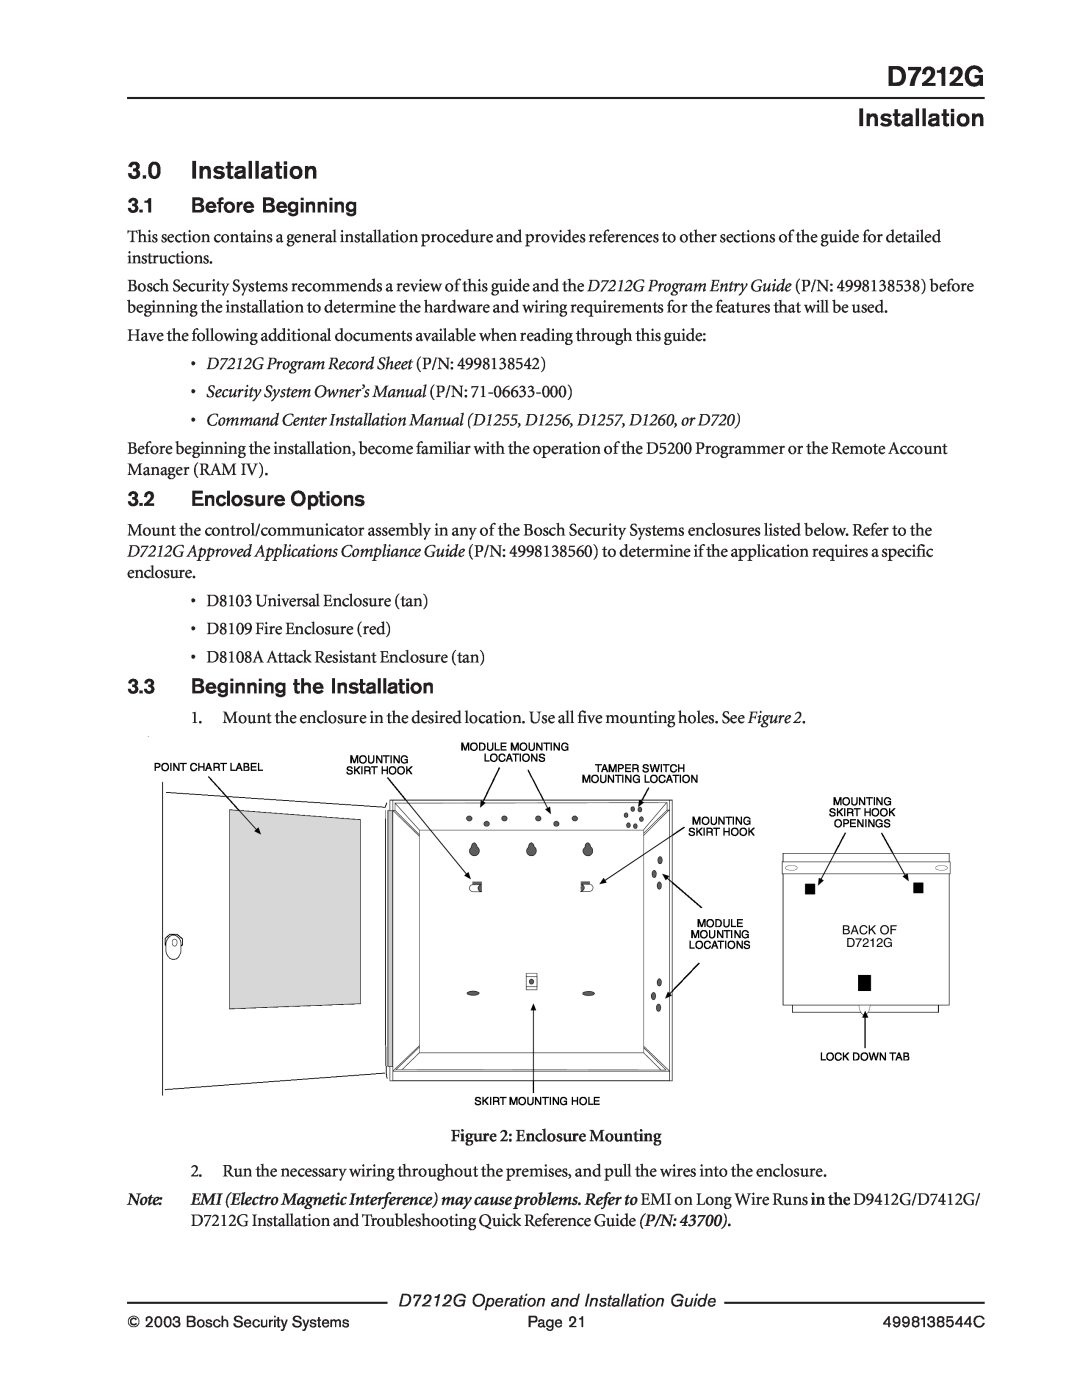 Bosch Appliances D7212G manual Installation 3.0Installation, 3.1Before Beginning, 3.2Enclosure Options 